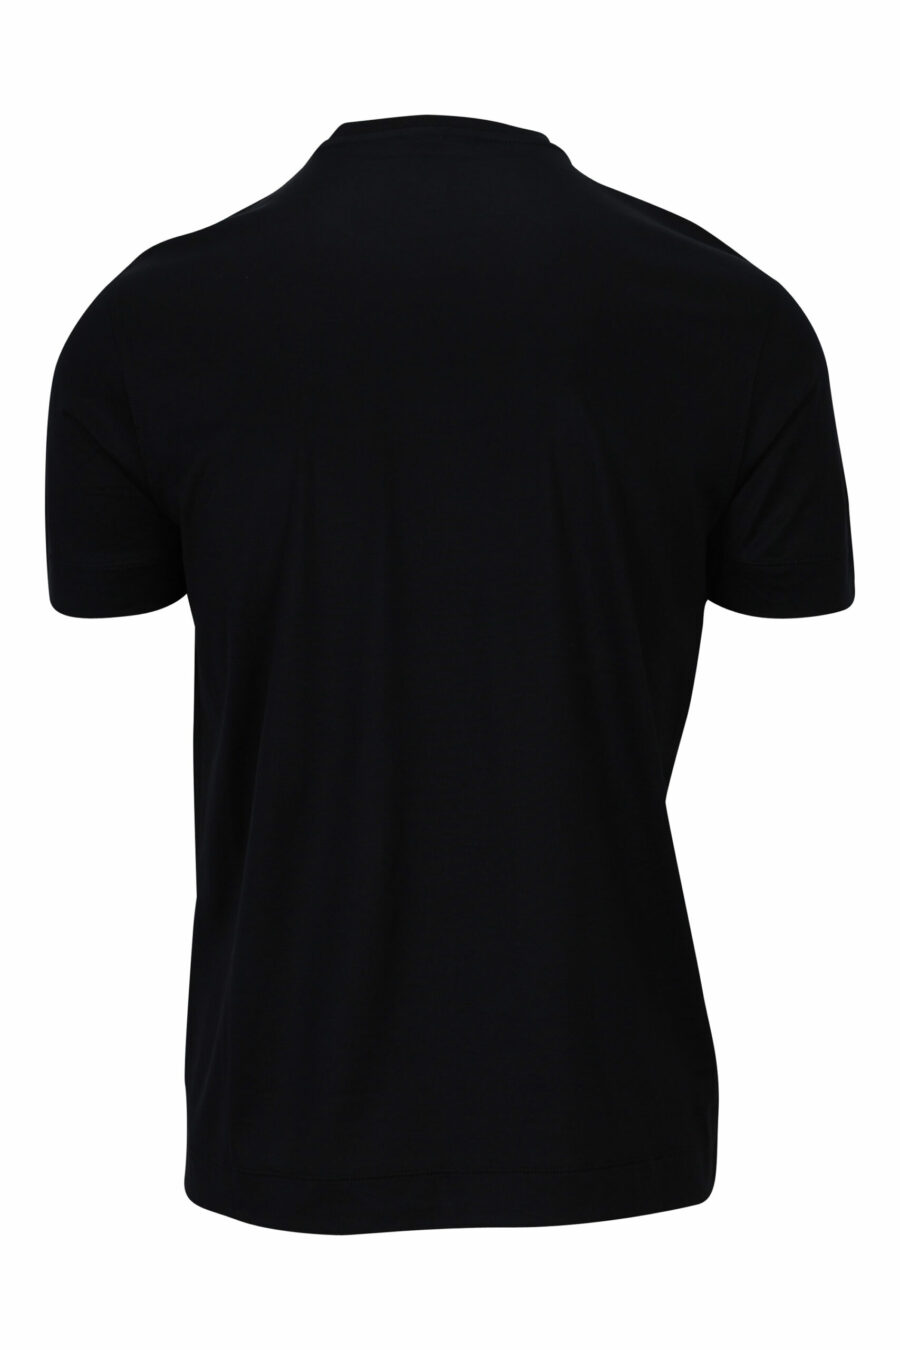 T-shirt noir avec maxilogo aigle blanc - 8057767554040 1 scaled